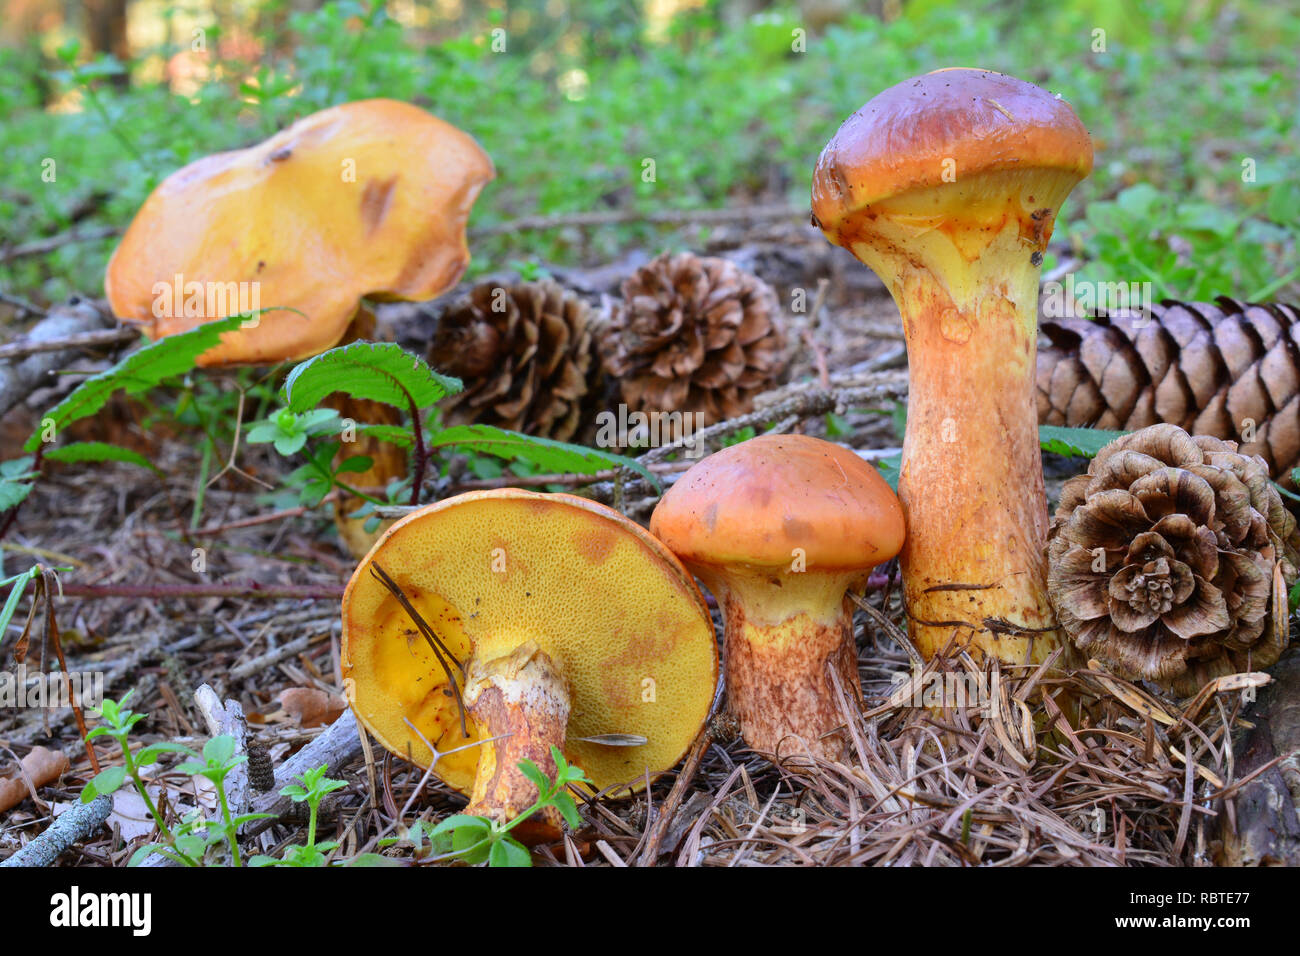 Larch Bolete mushrooms, or Suillus grevillei, delicious edible mushrooms in natural habitat, in the forest,  under larch tree, horizontal orientation Stock Photo